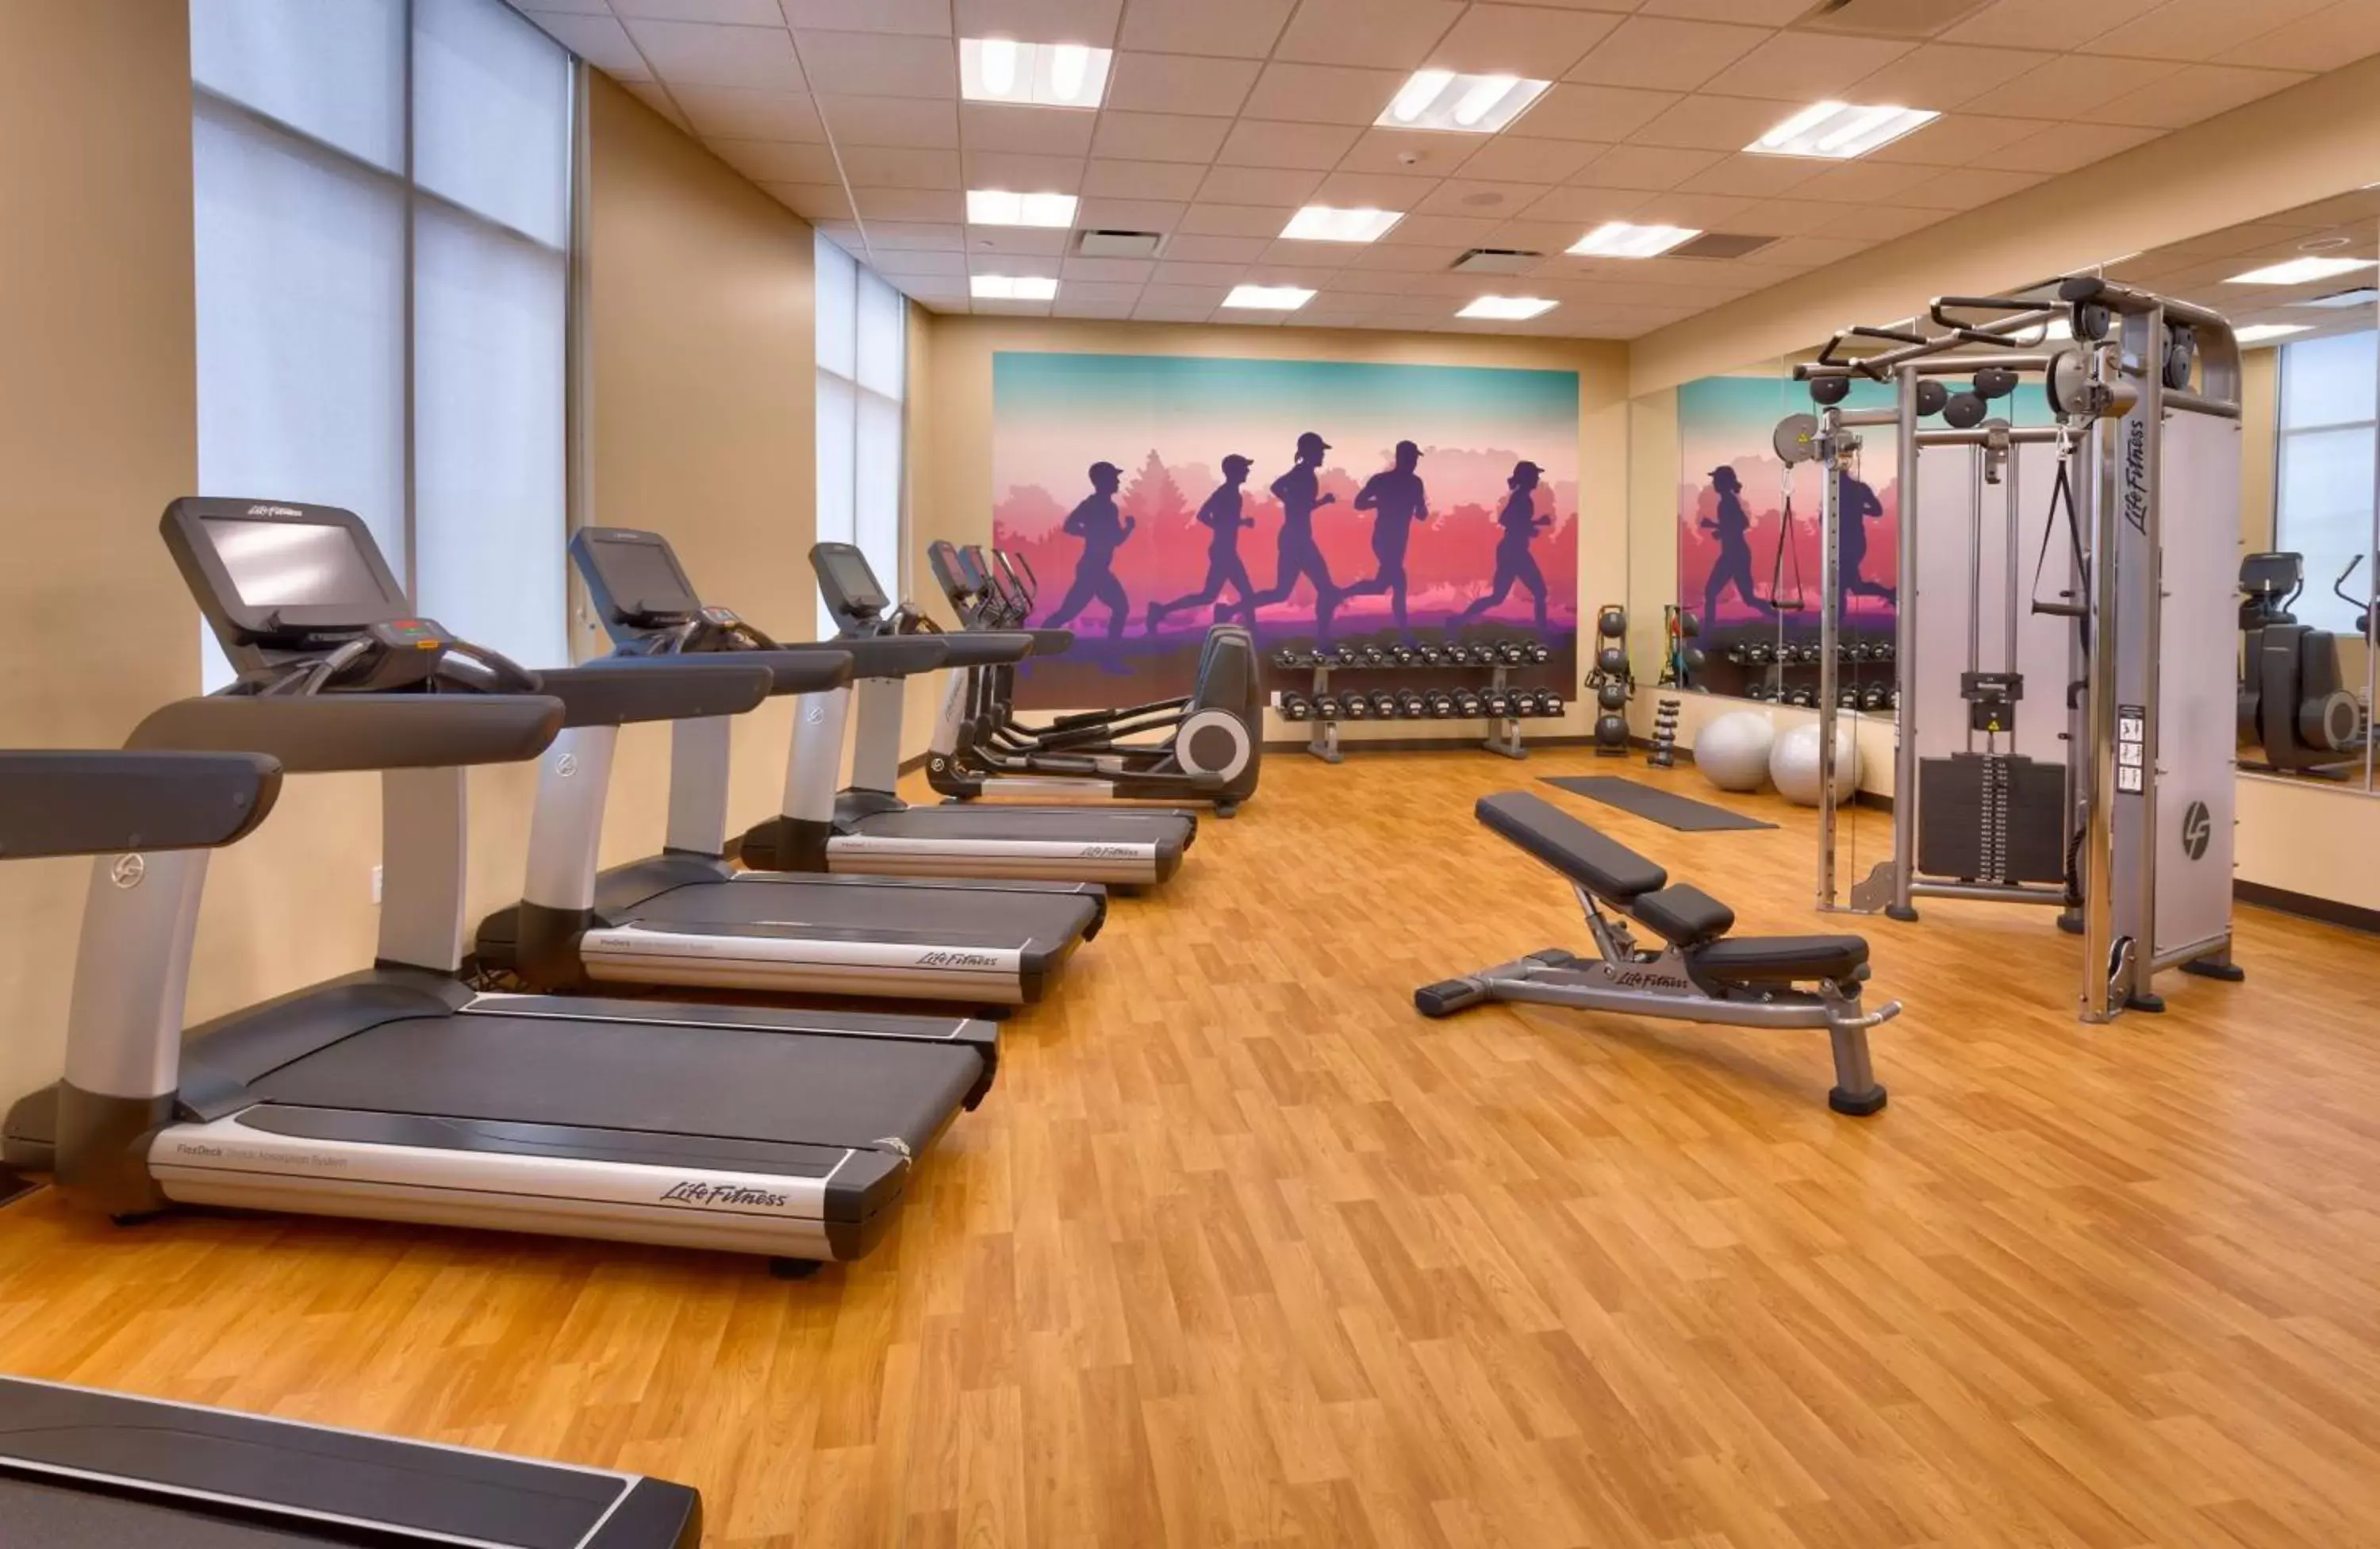 Fitness centre/facilities, Fitness Center/Facilities in Hyatt Place Salt Lake City Farmington Station Park